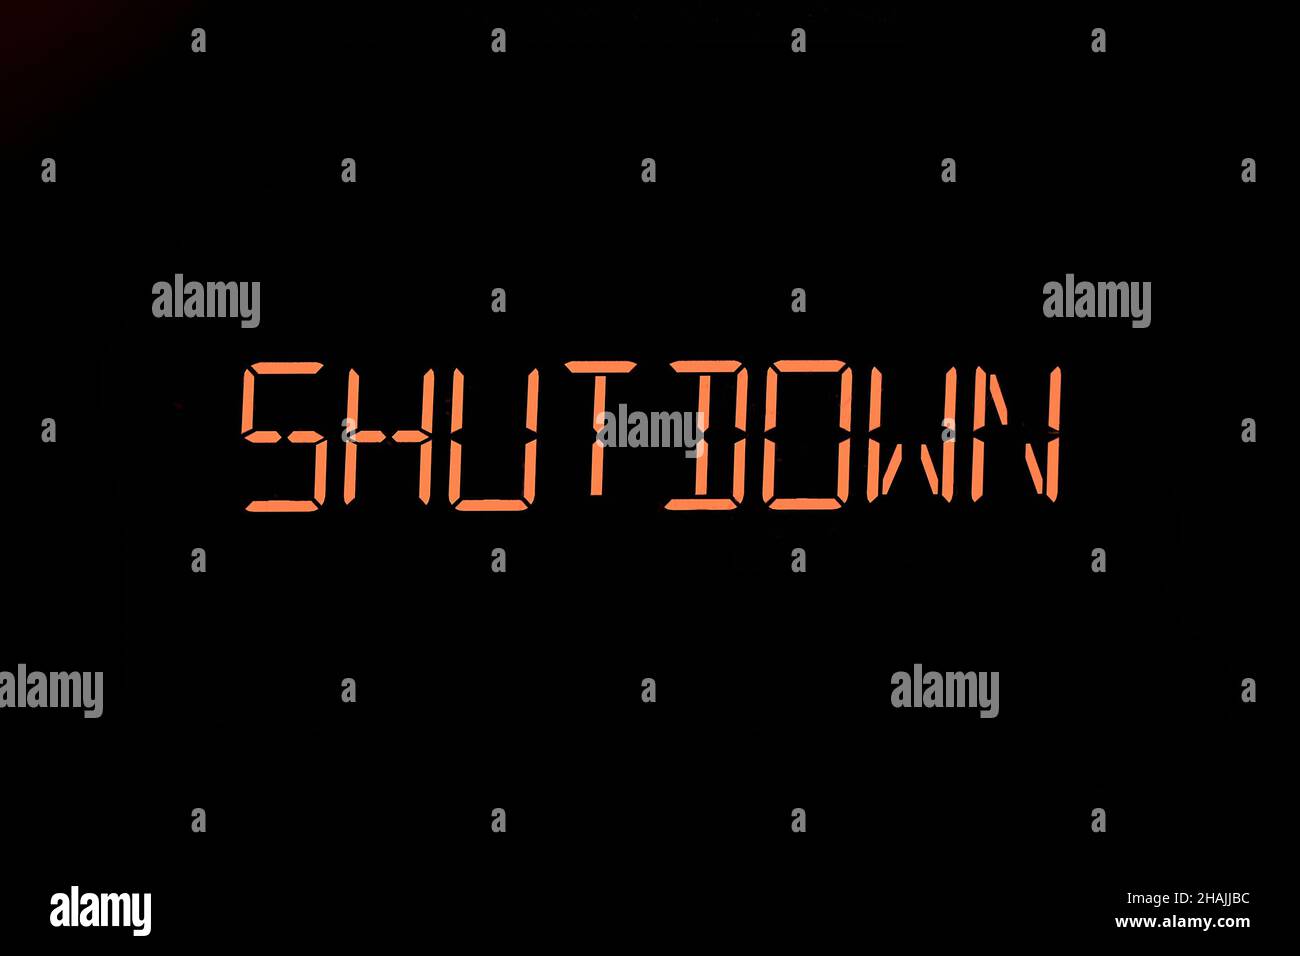 Shutdown message on an electronc screen Stock Photo